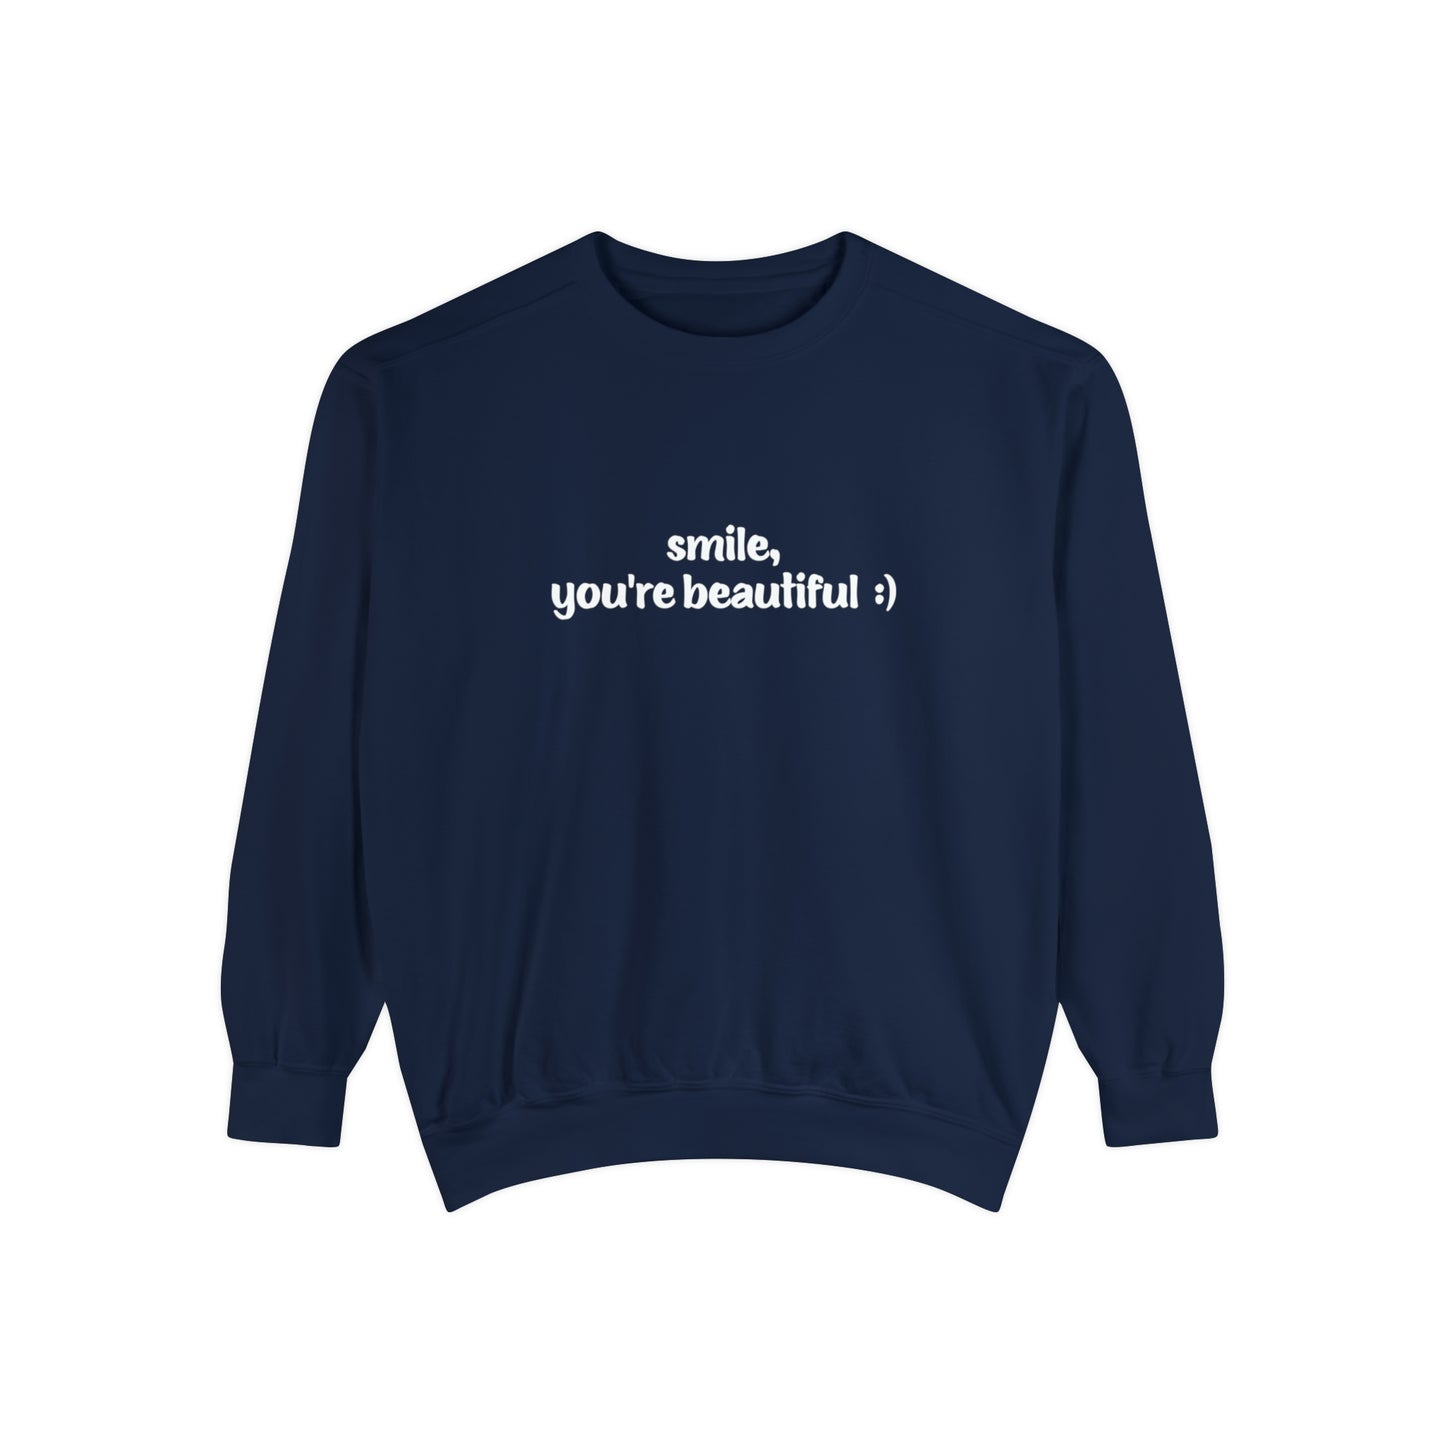 smile, you're beautiful :) | unisex premium sweatshirt